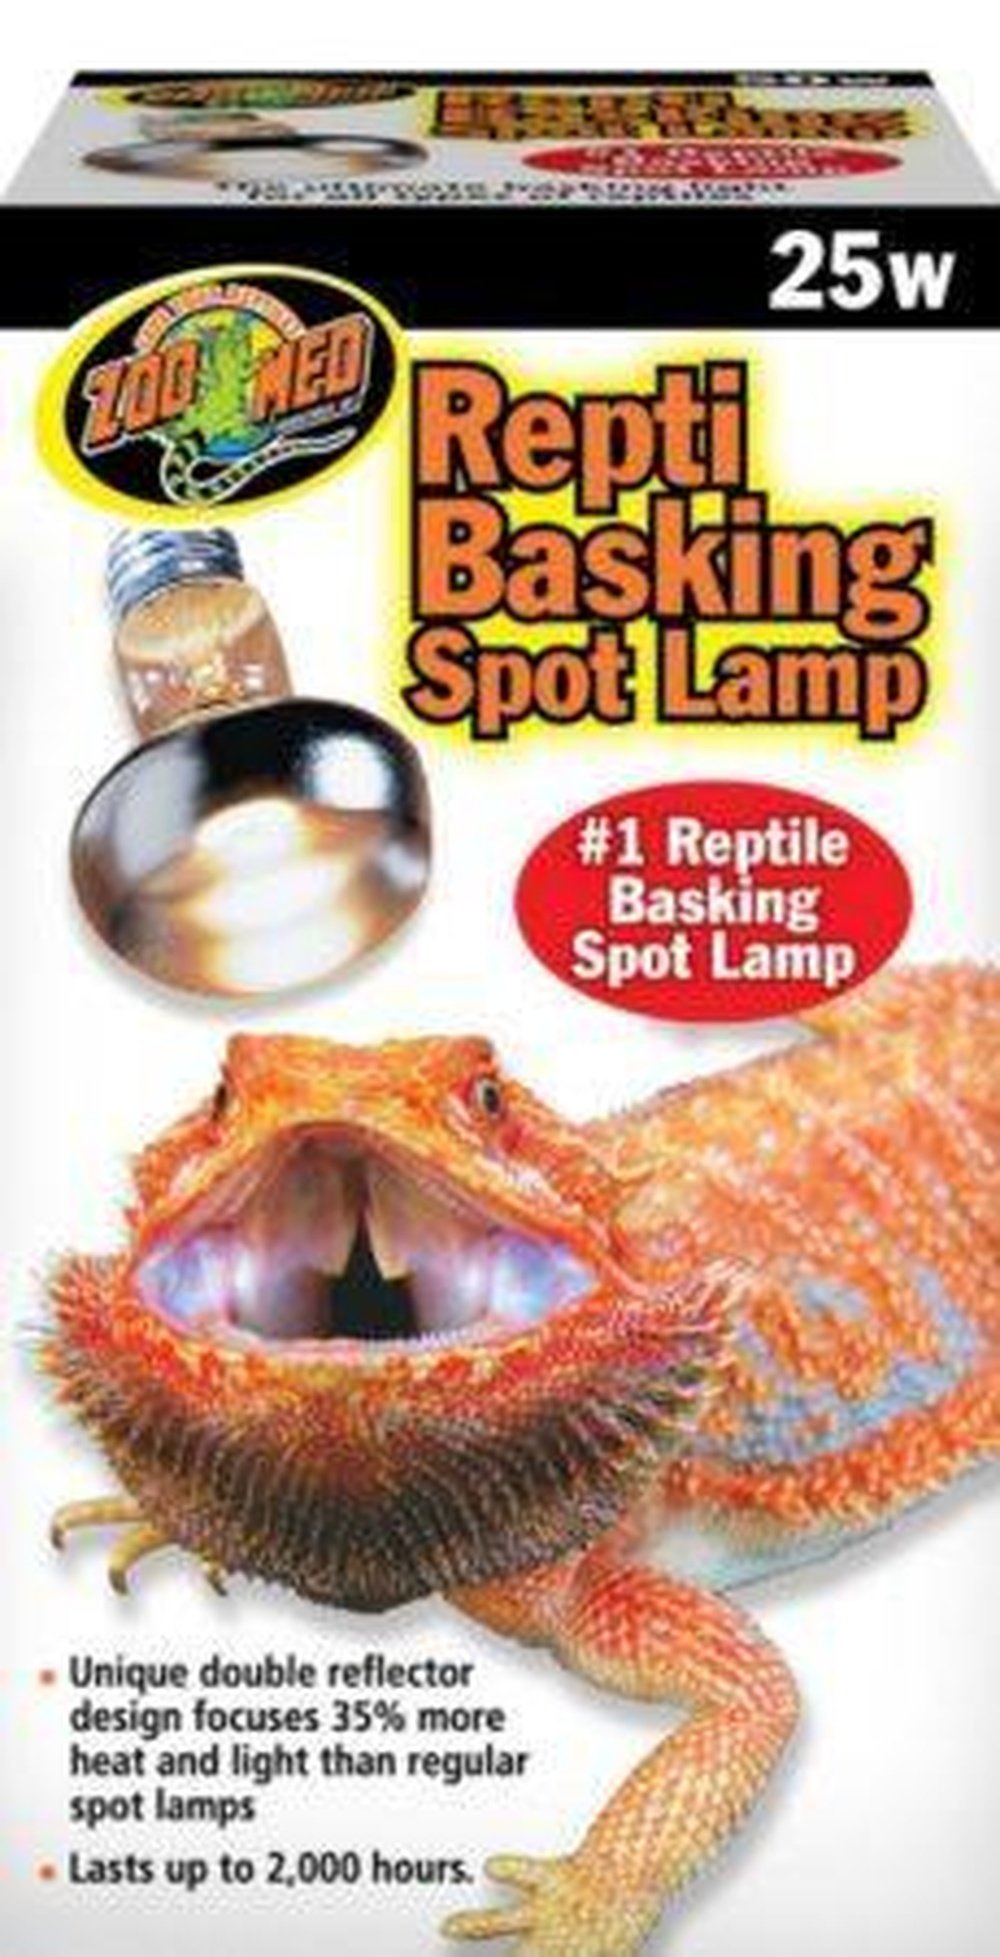 Zoo Med Repti Basking Spot Lamp, 25w